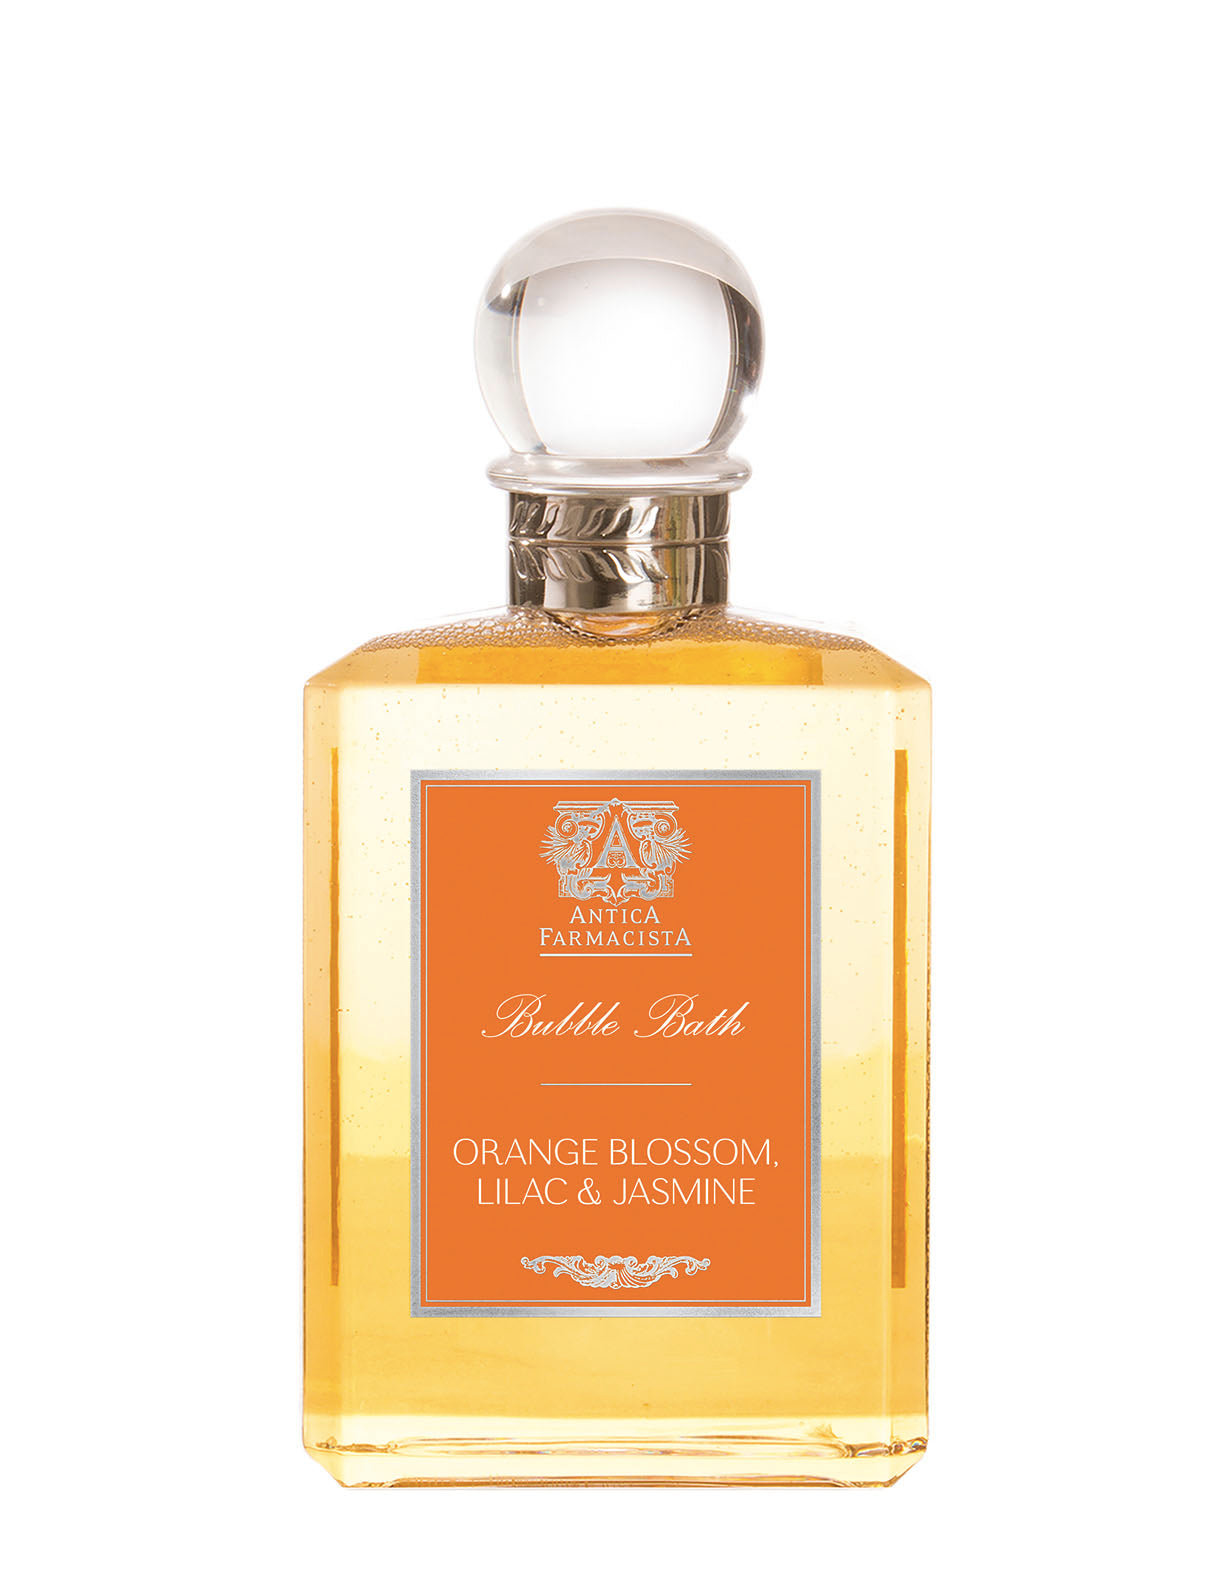 Designer Perfume Fragrance BLOSSOM TIMES SYMPHONY RHAPSODY COSMIC